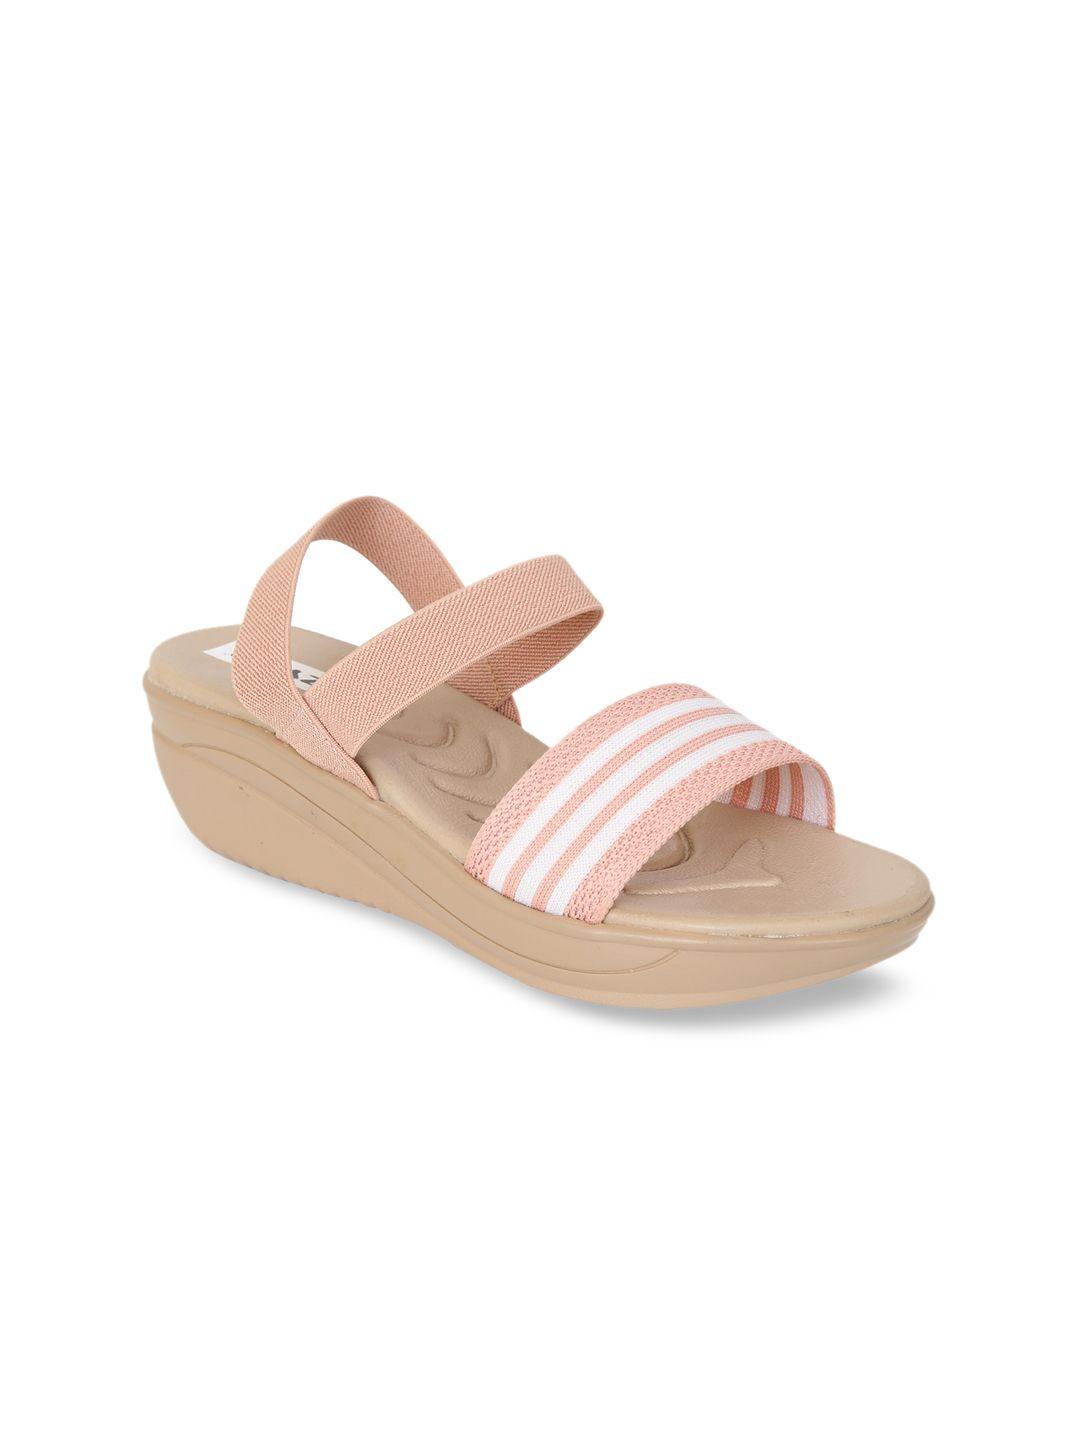 Zyla Peach & White Wedge Sandals